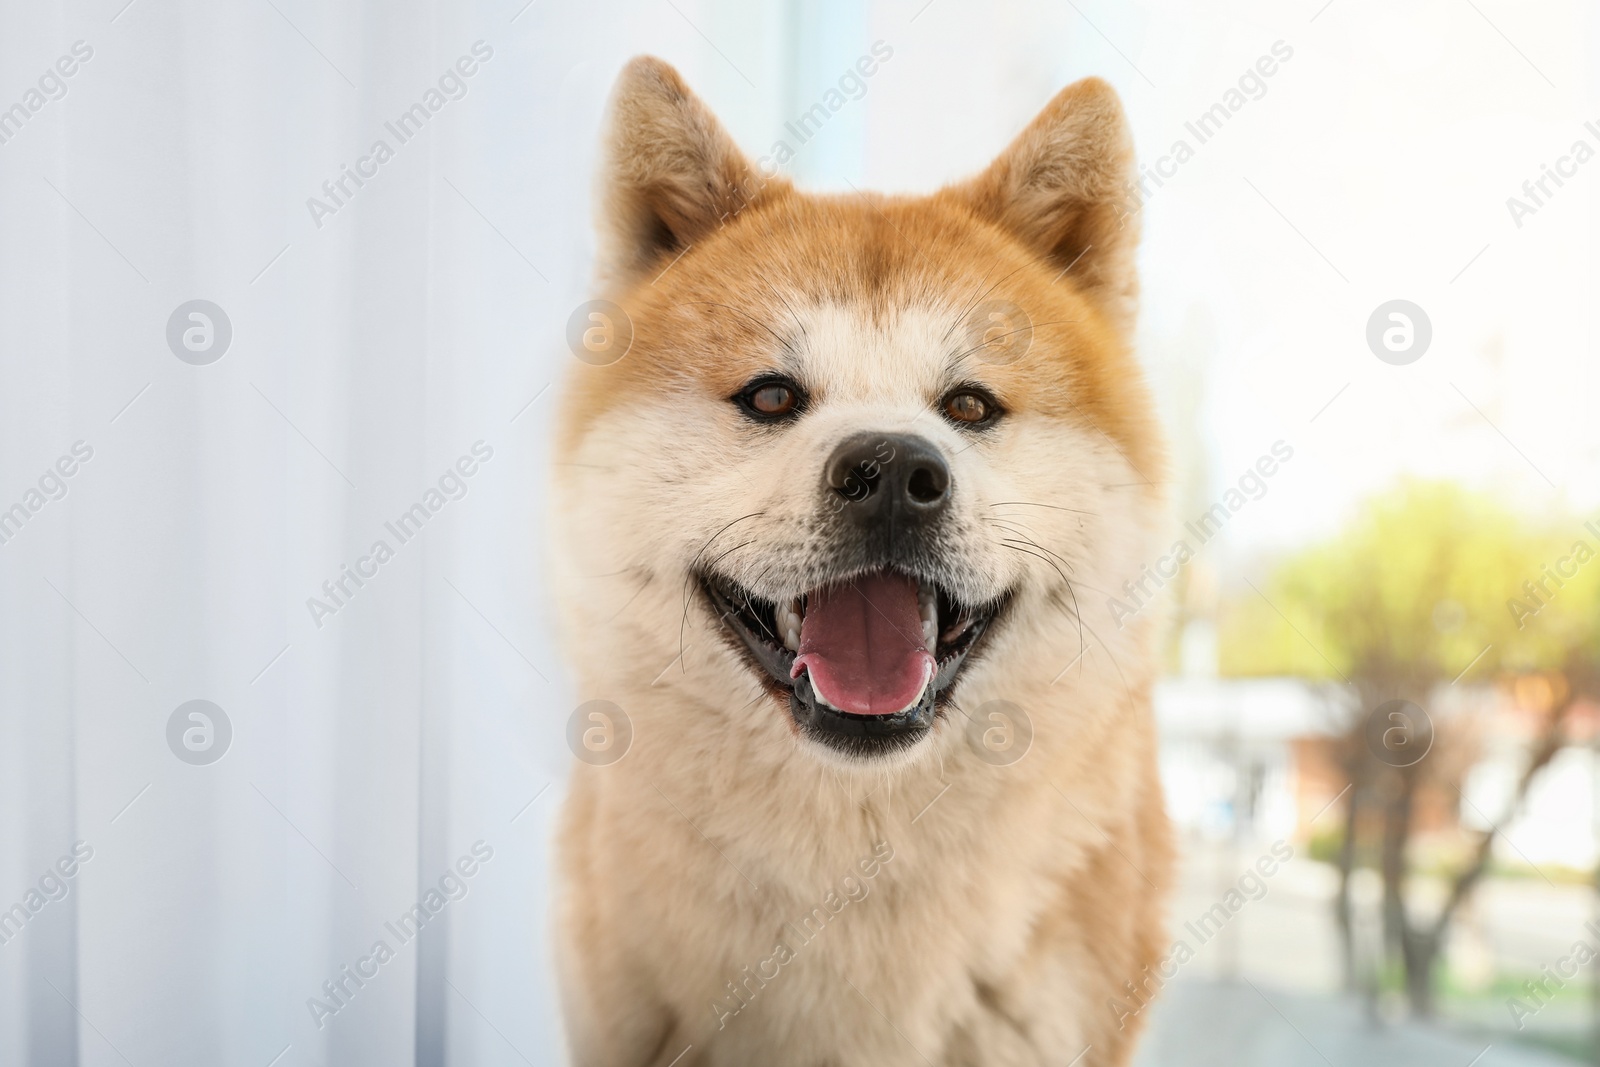 Photo of Cute Akita Inu dog near window indoors